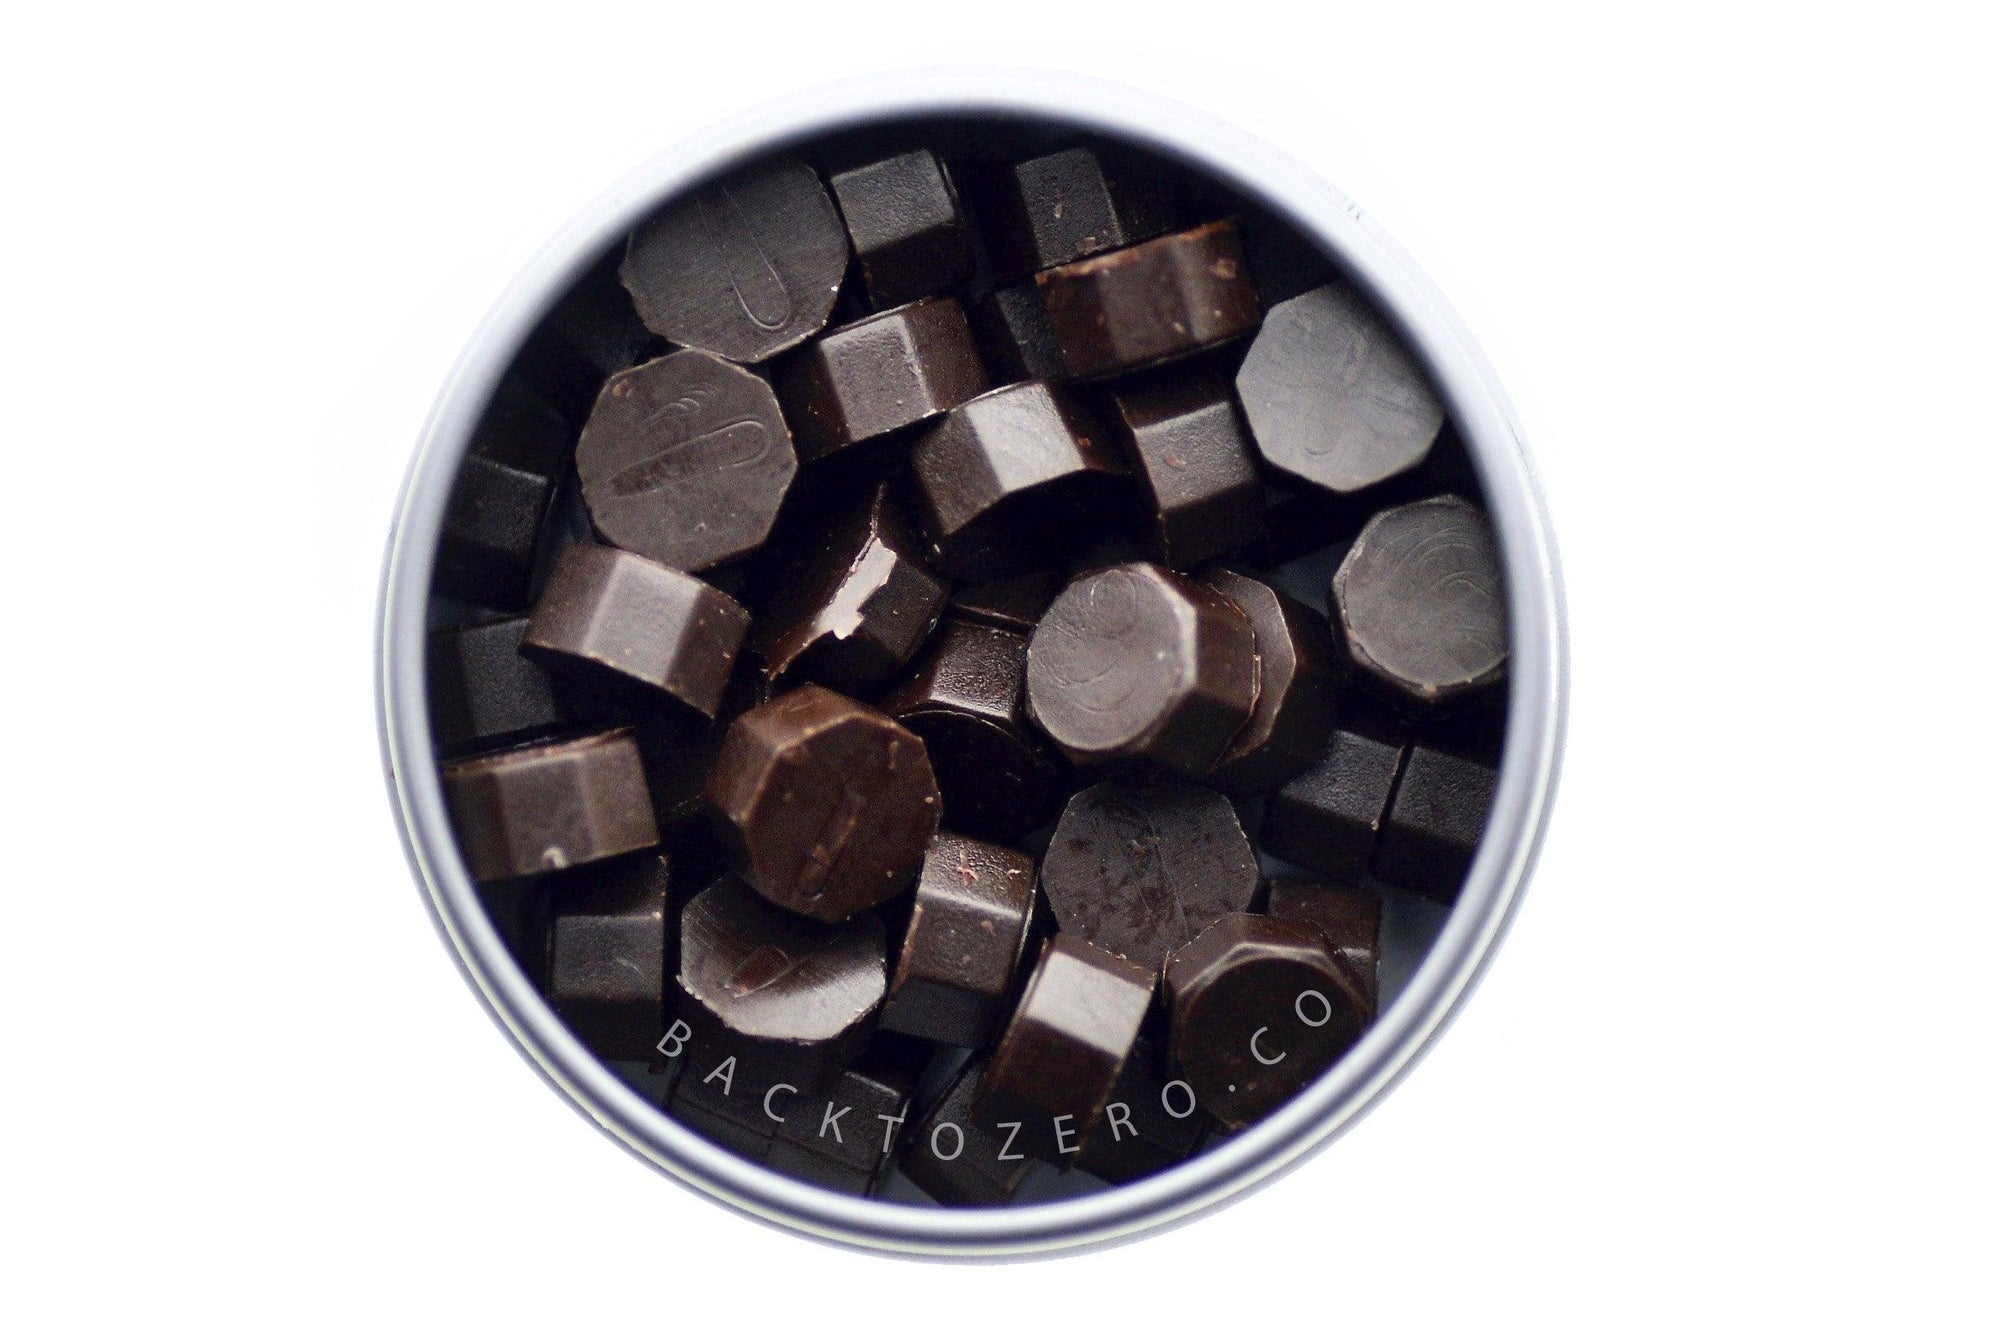 Brown Octagon Sealing Wax Beads - Backtozero B20 - brown, octagon bead, sealing wax, tin, Wax Beads